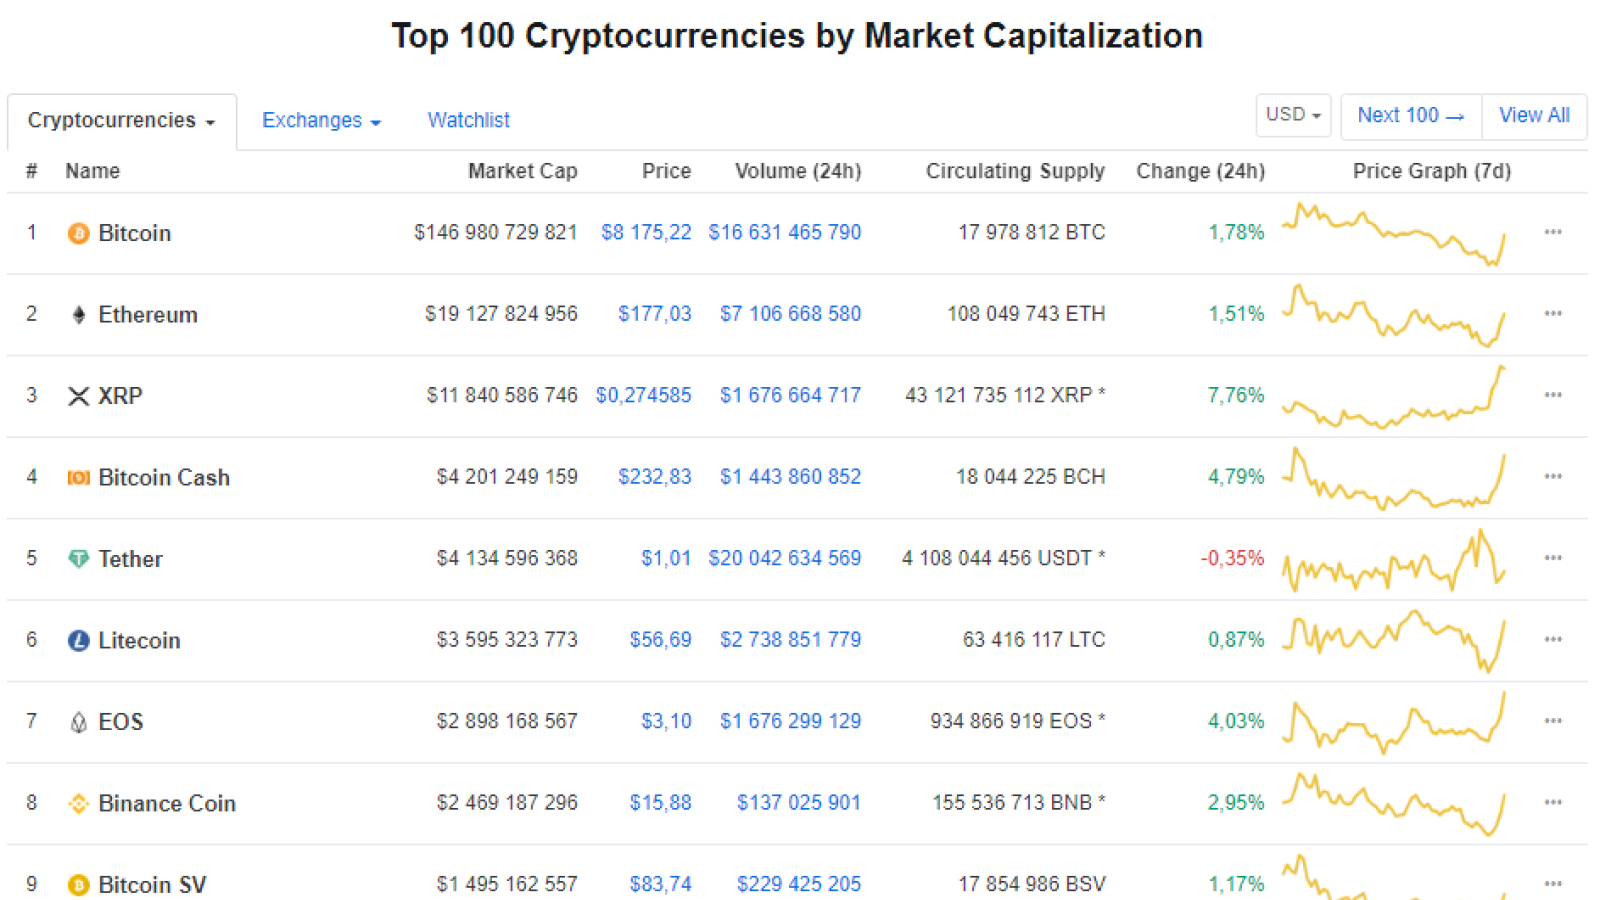 Top 10 Cryptocurrencies Price Change Charts